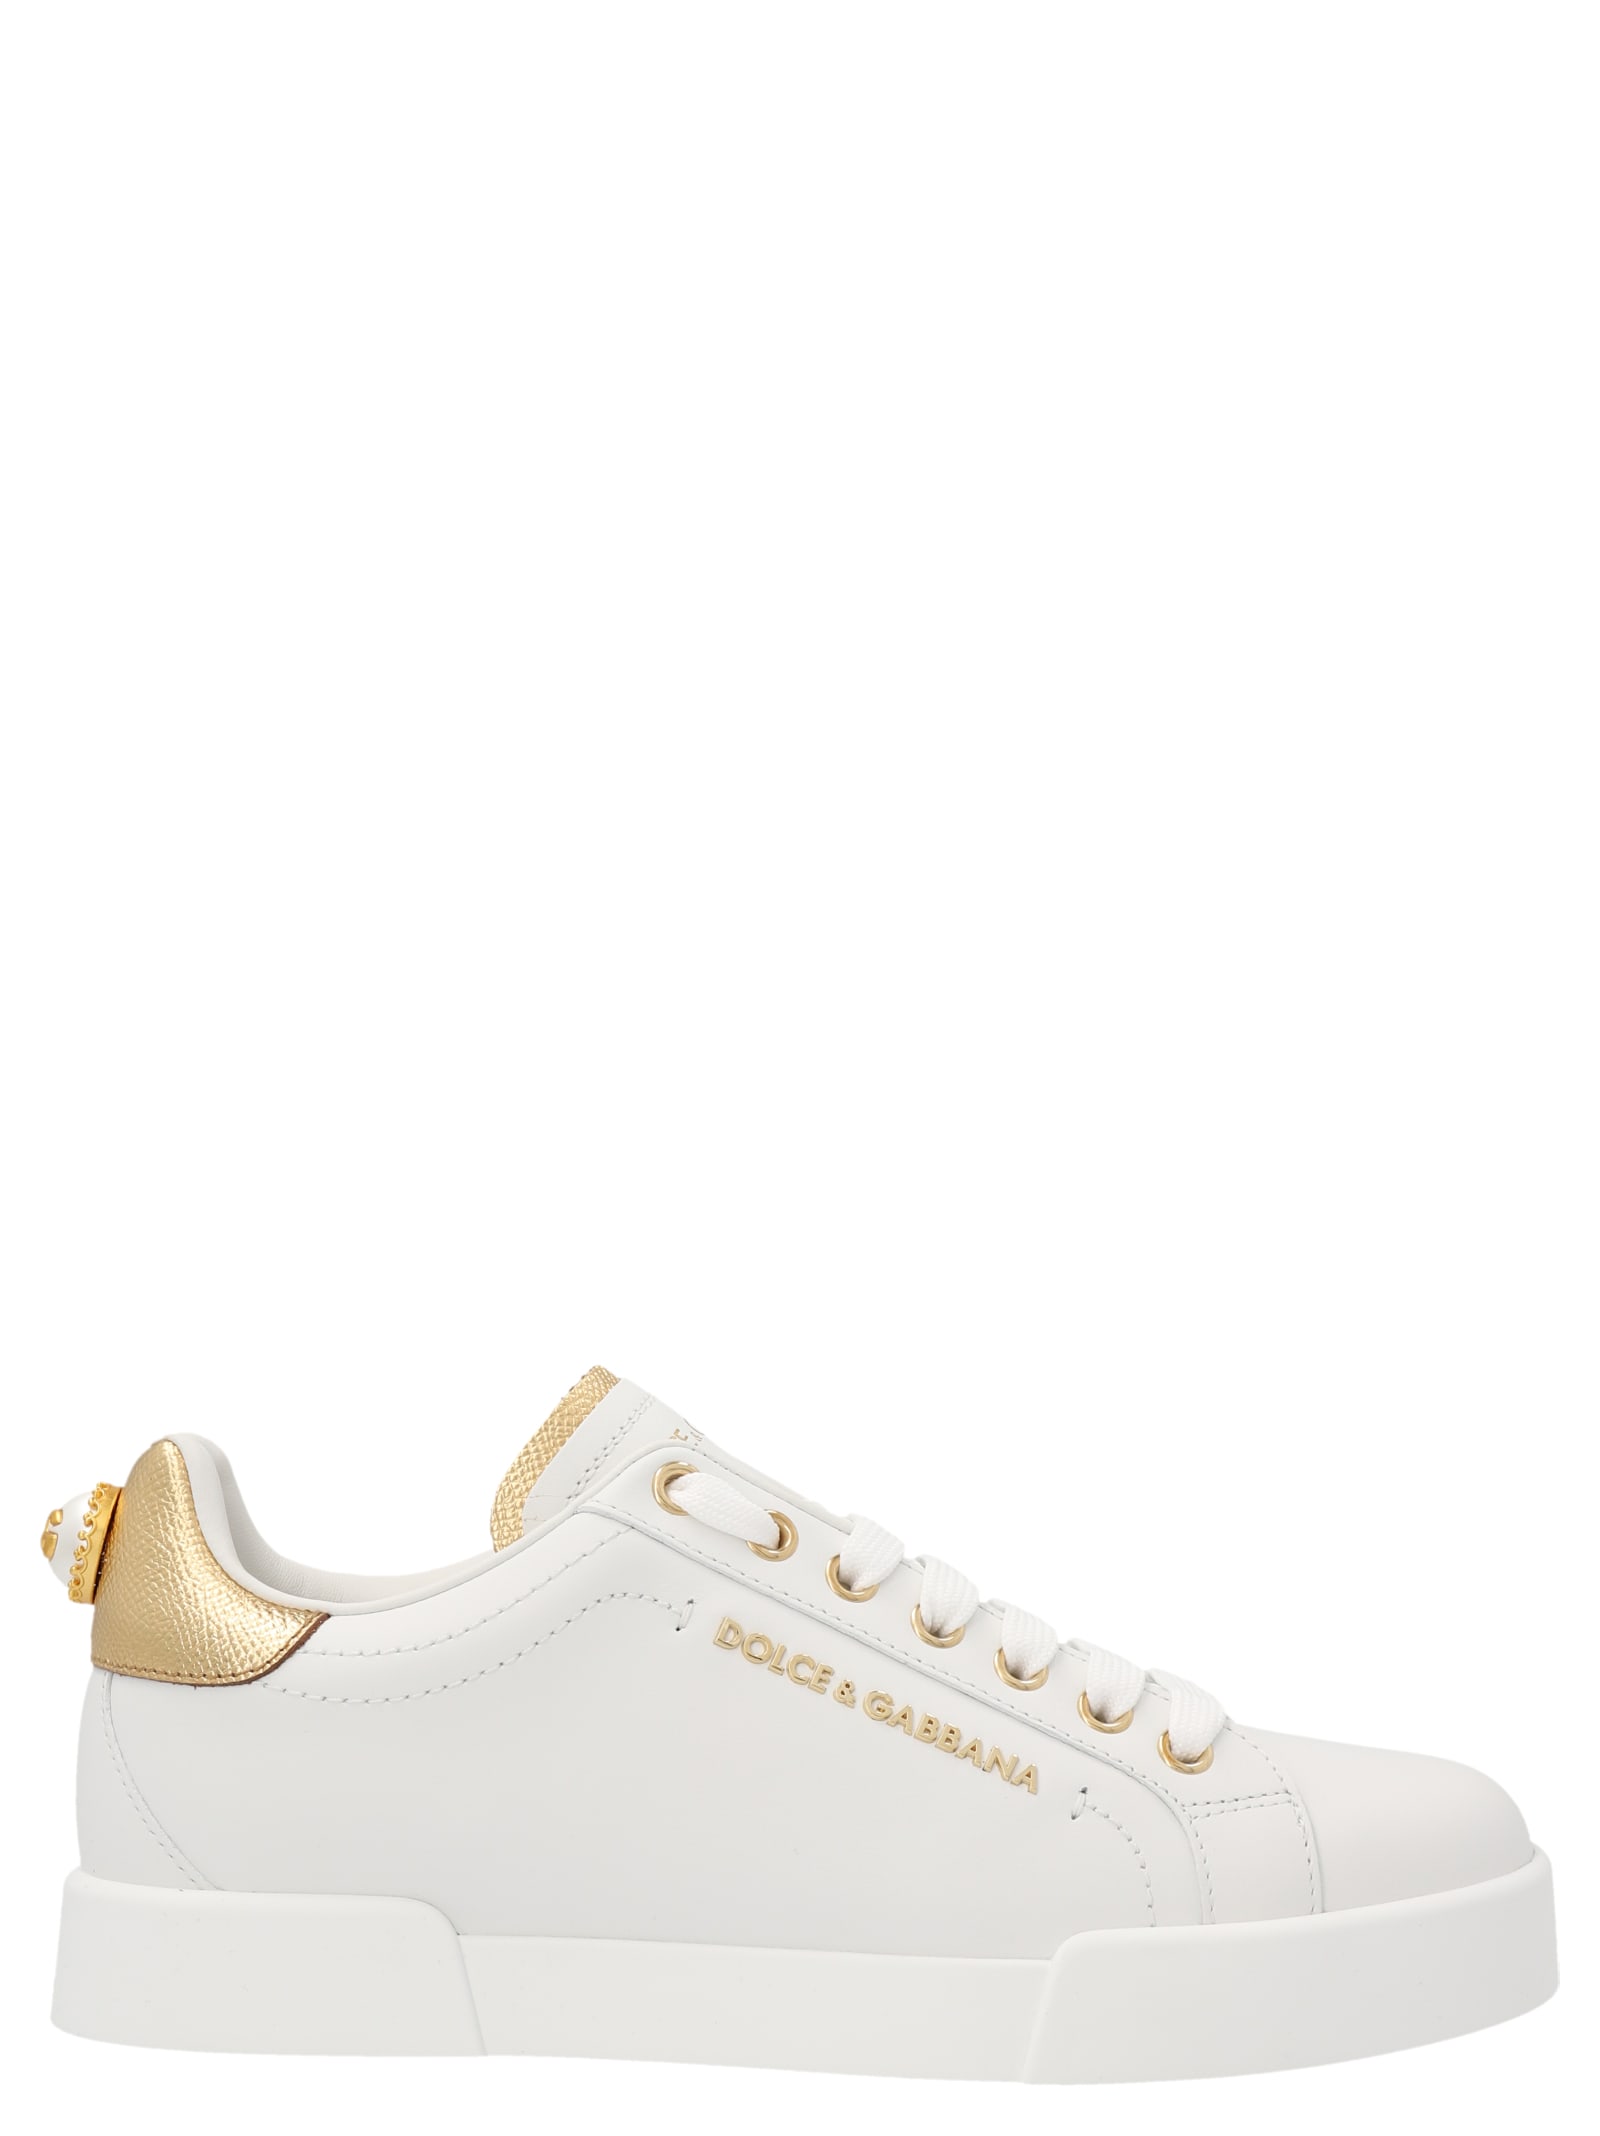 Dolce & Gabbana Portofino Sneakers In Gold